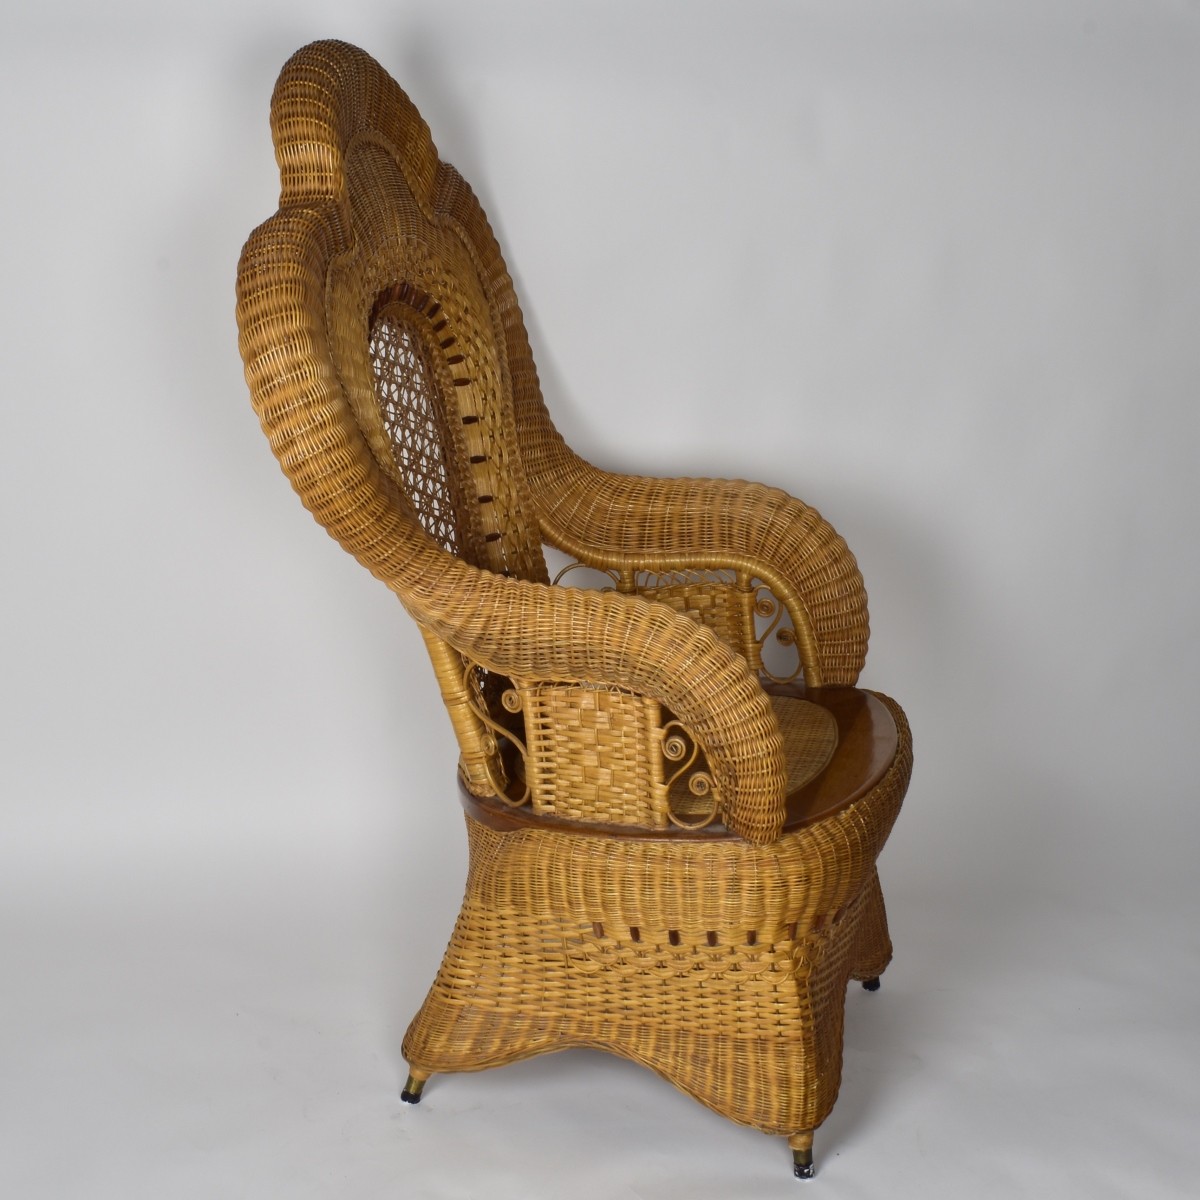 Ornate Peacock Wicker Chair